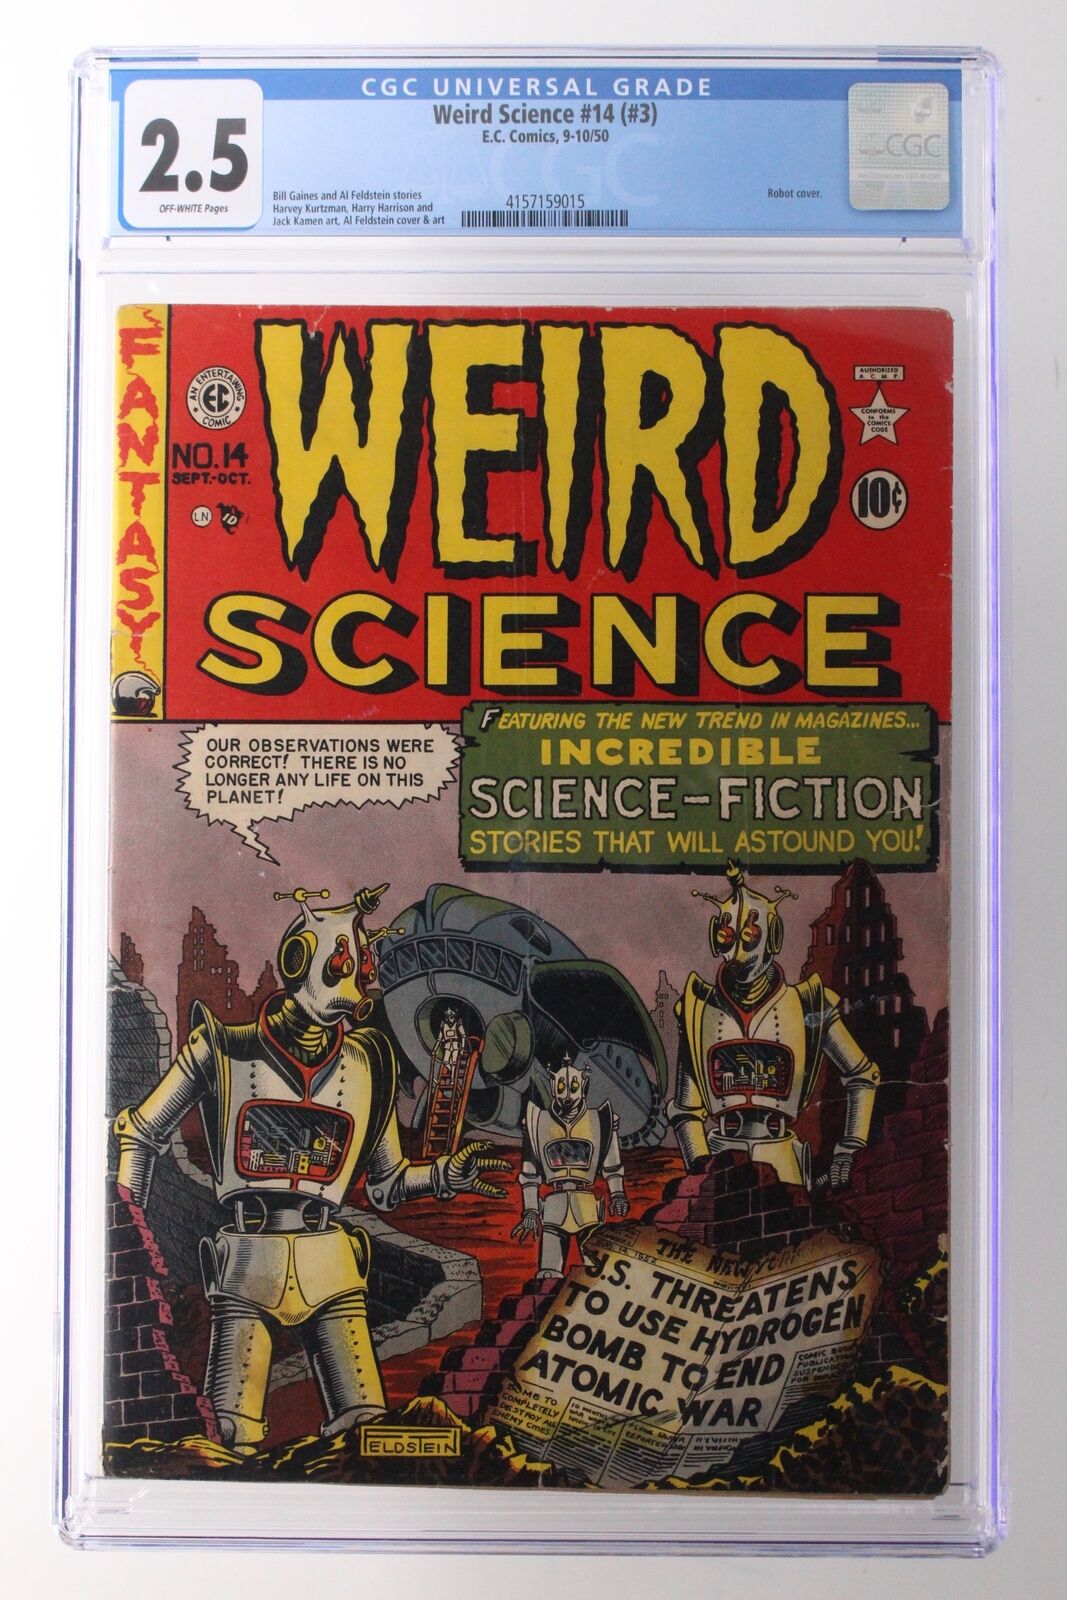 Weird Science #14 (#3) - EC 1950 CGC 2.5 Robot cover.